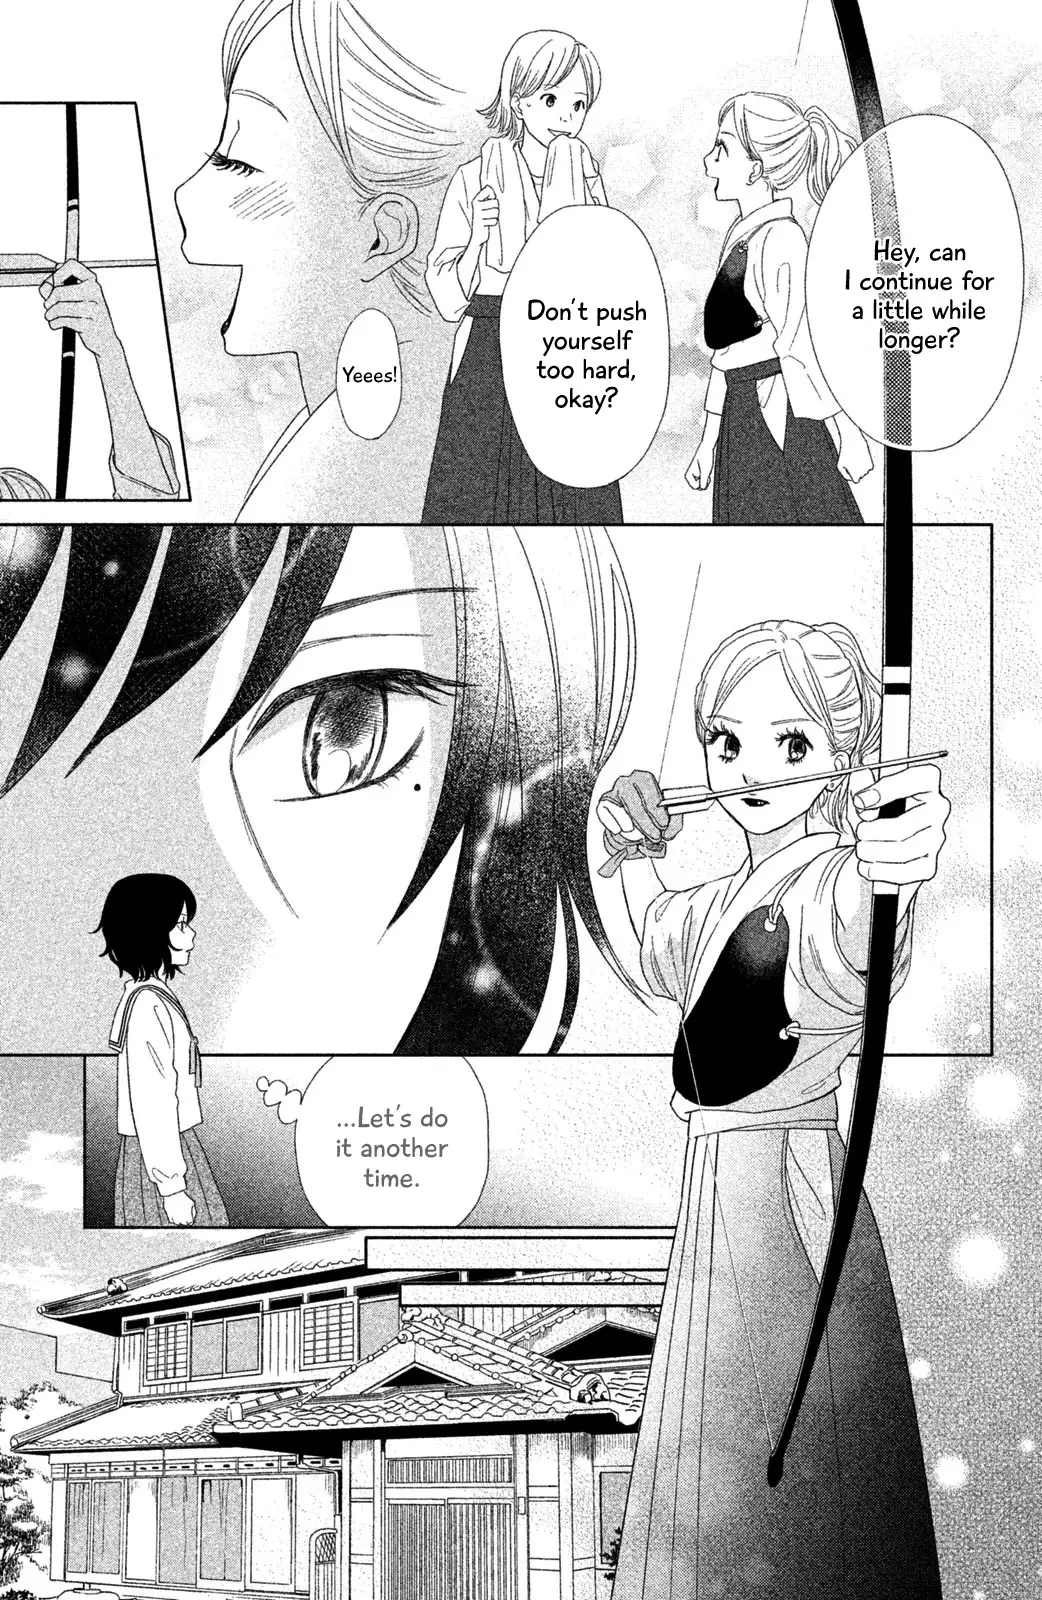 Chihayafuru: Middle School Arc - 11 page 10